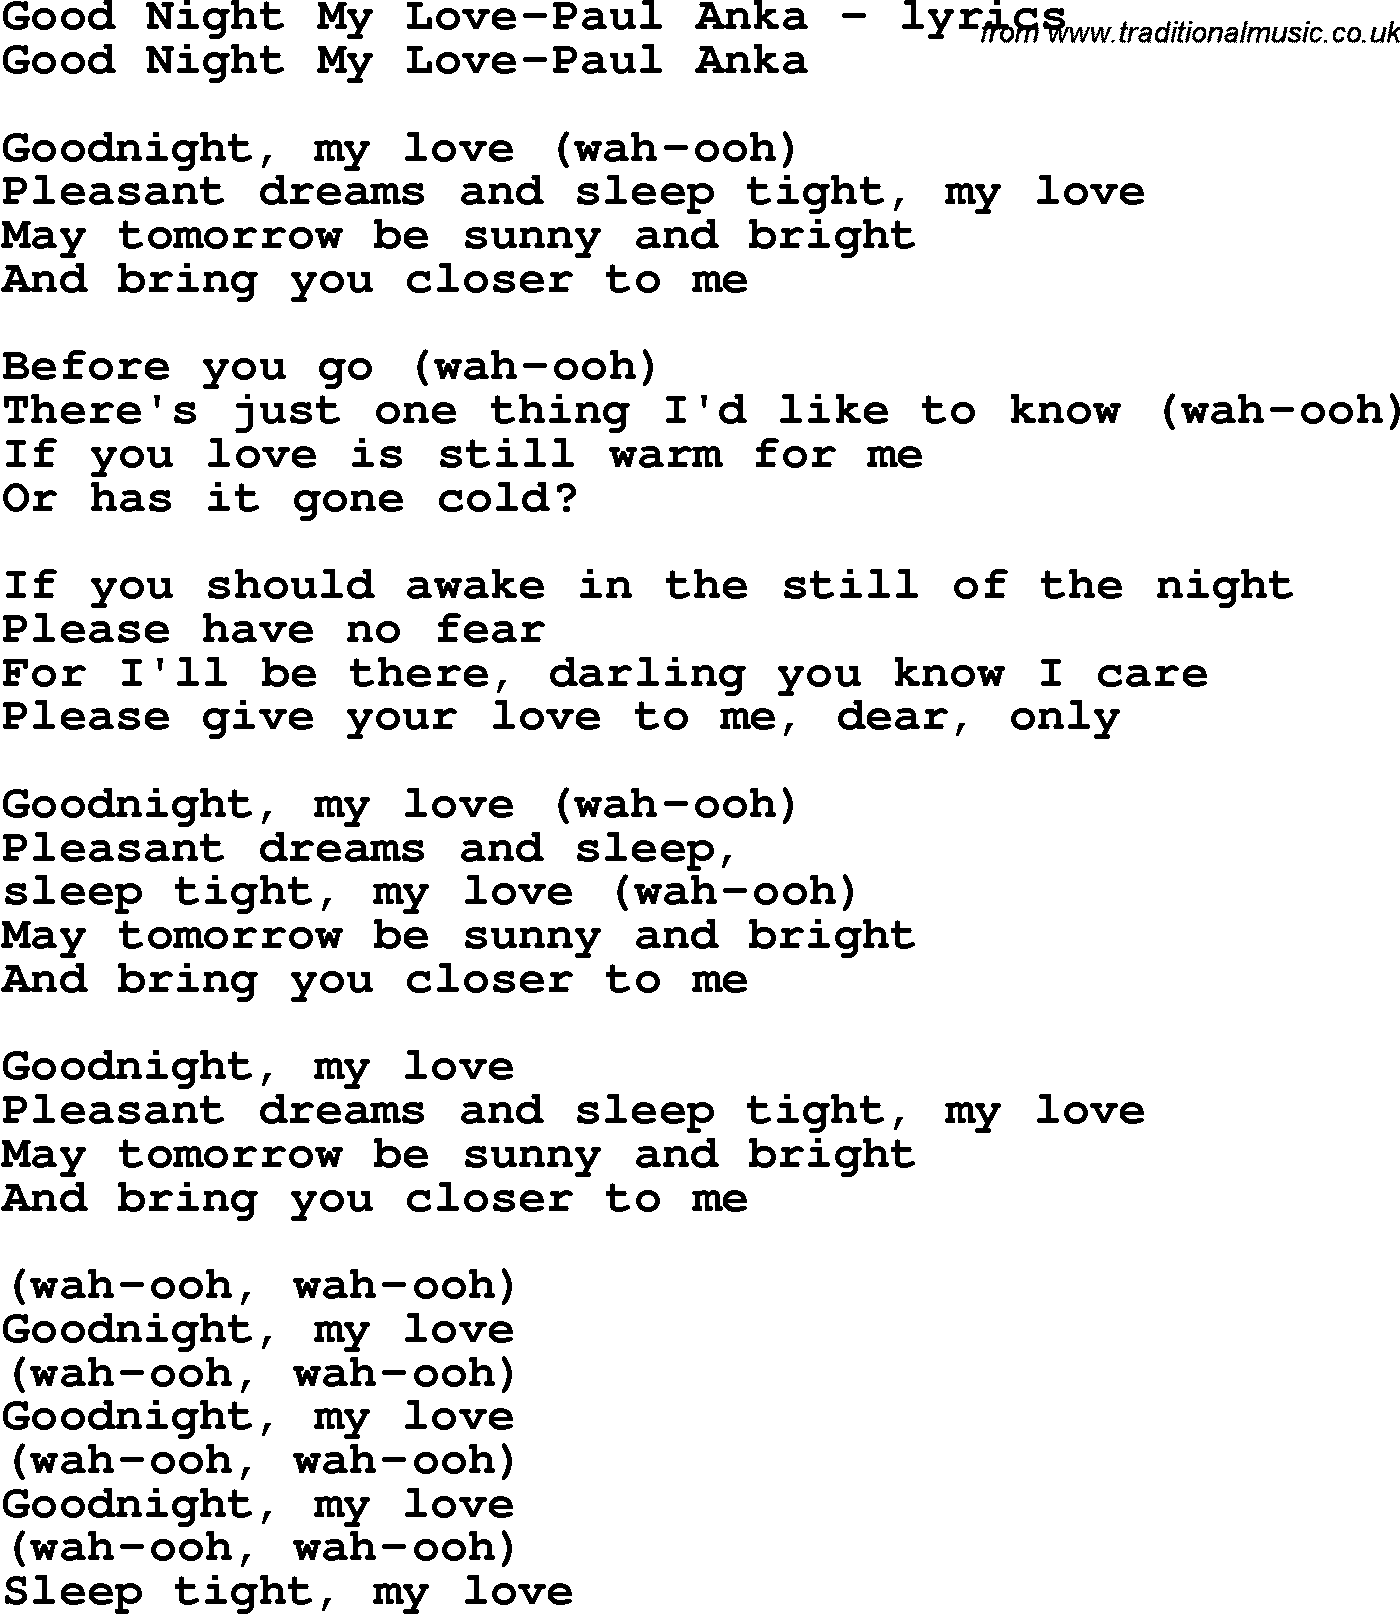 Love Song Lyrics for: Good Night My Love-Paul Anka